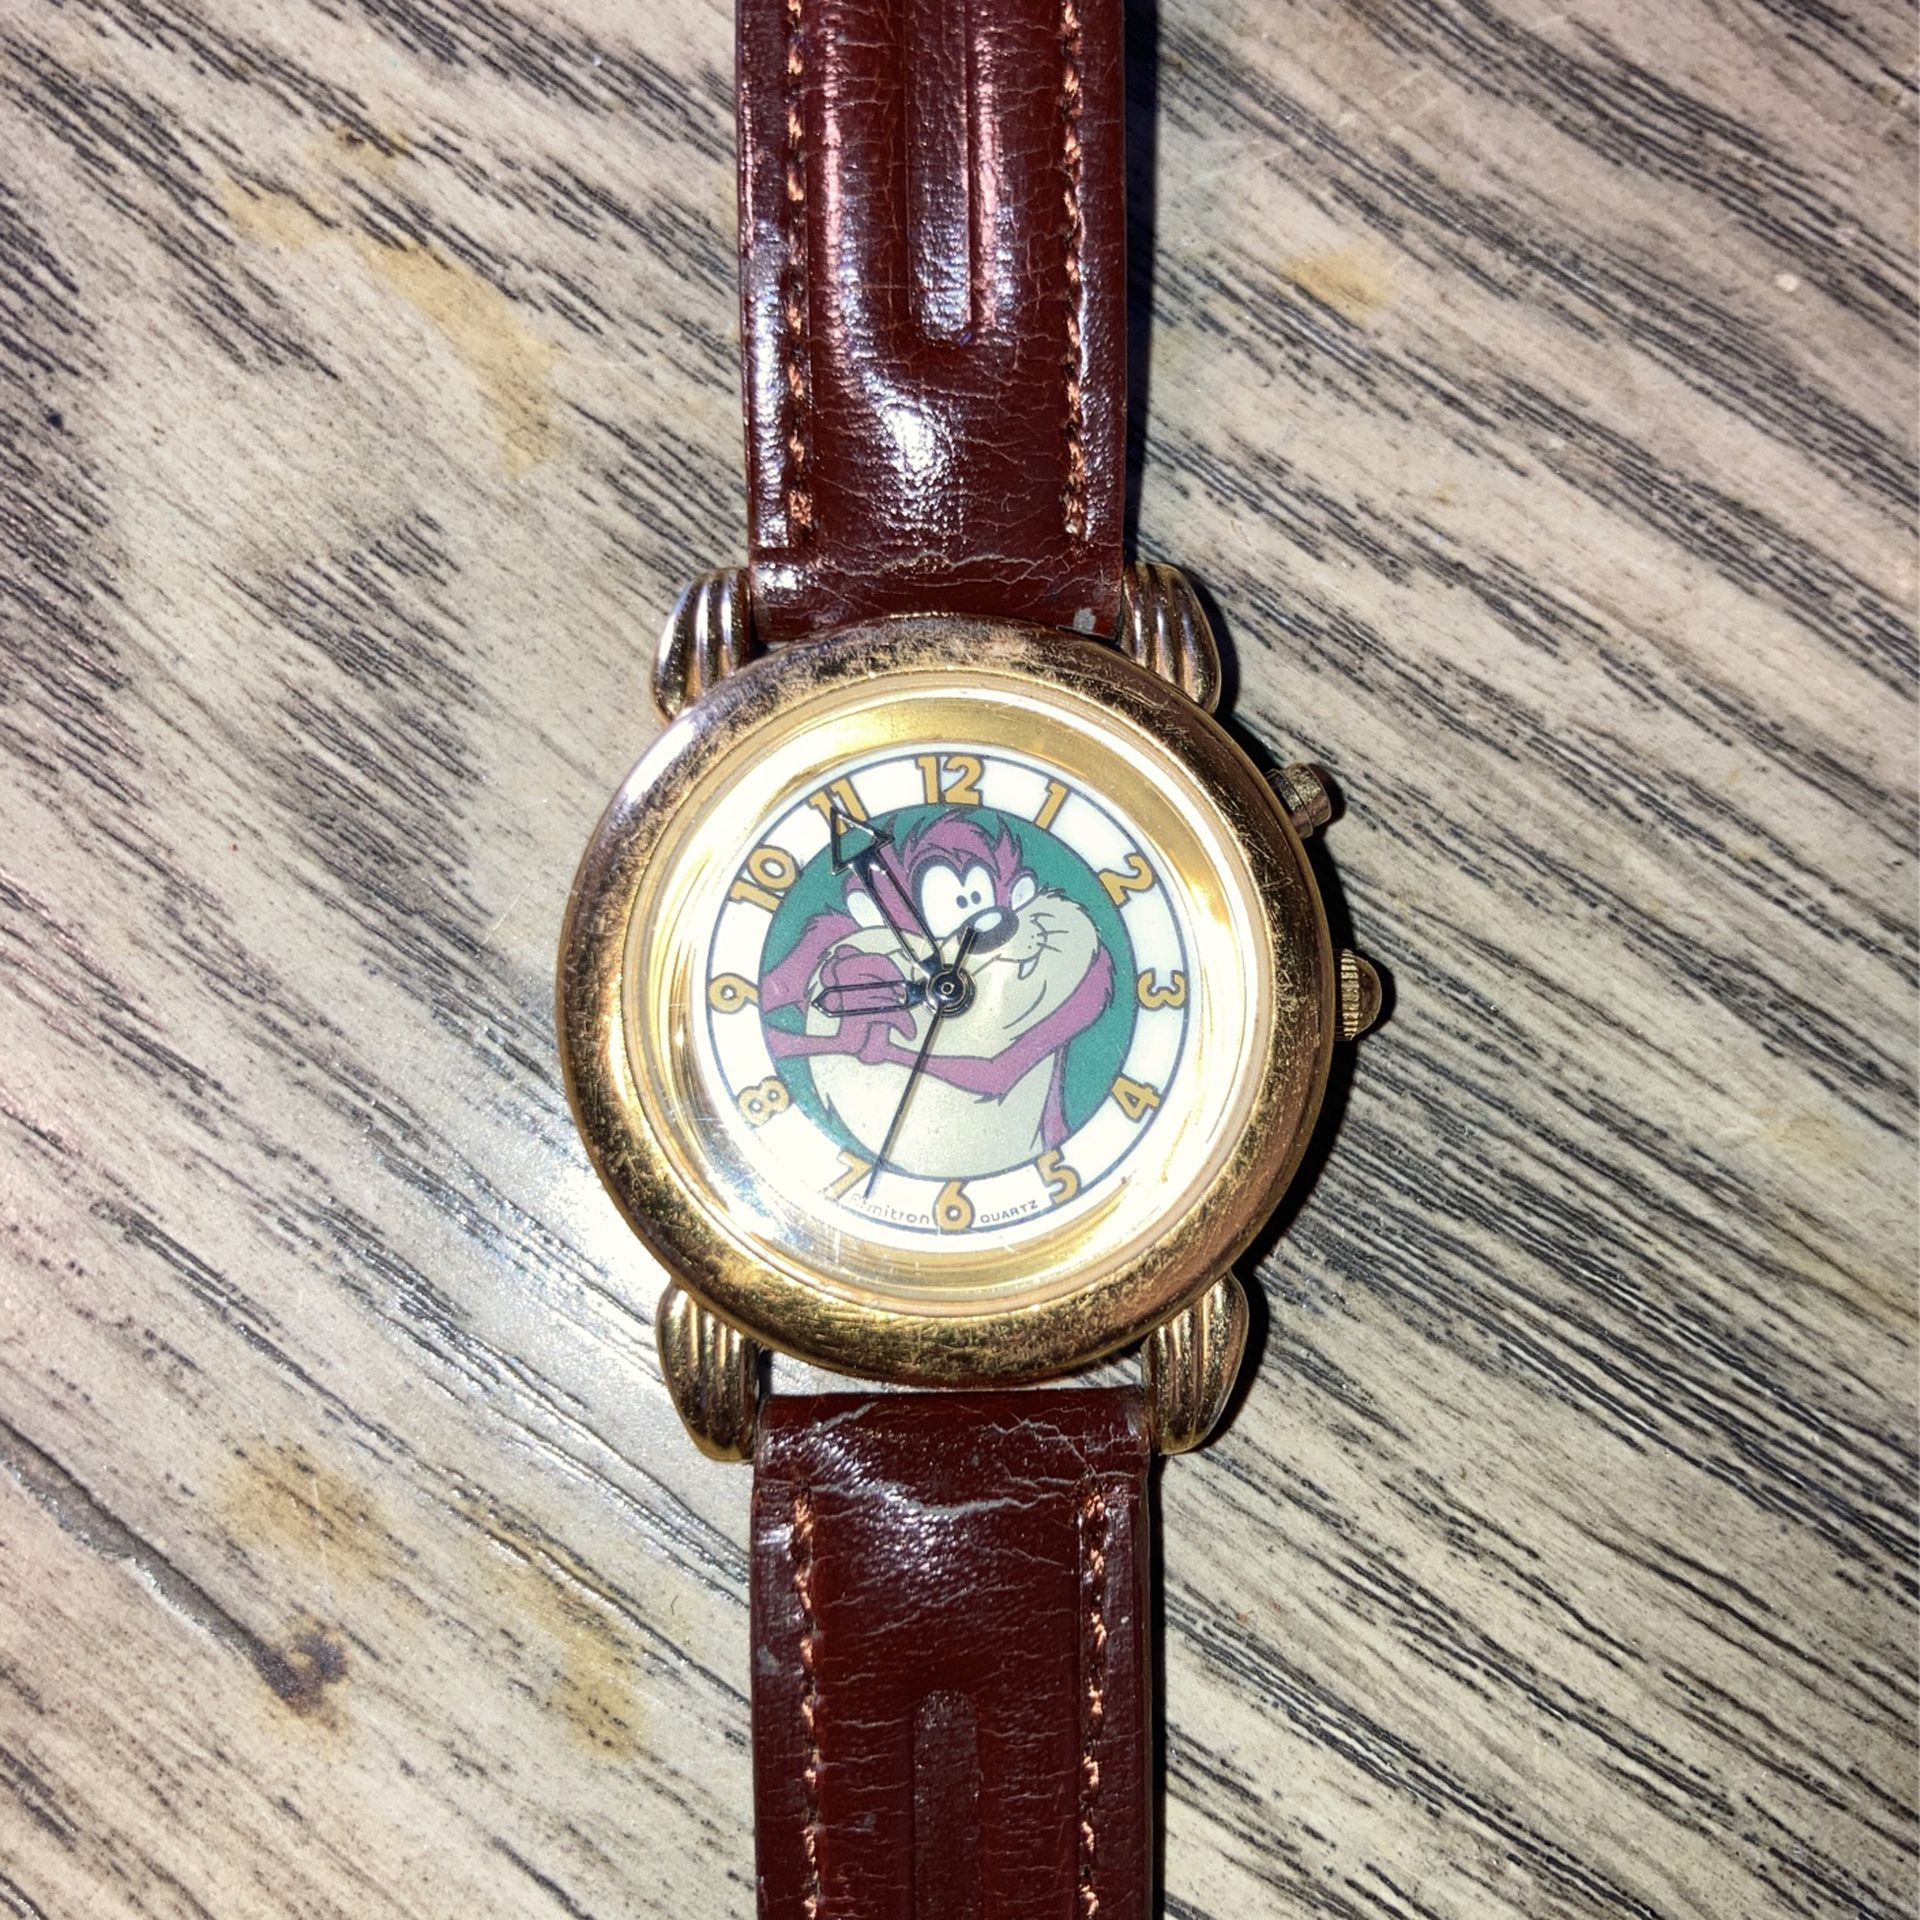 Alice in Wonderland Brown Leather Wrist Watch